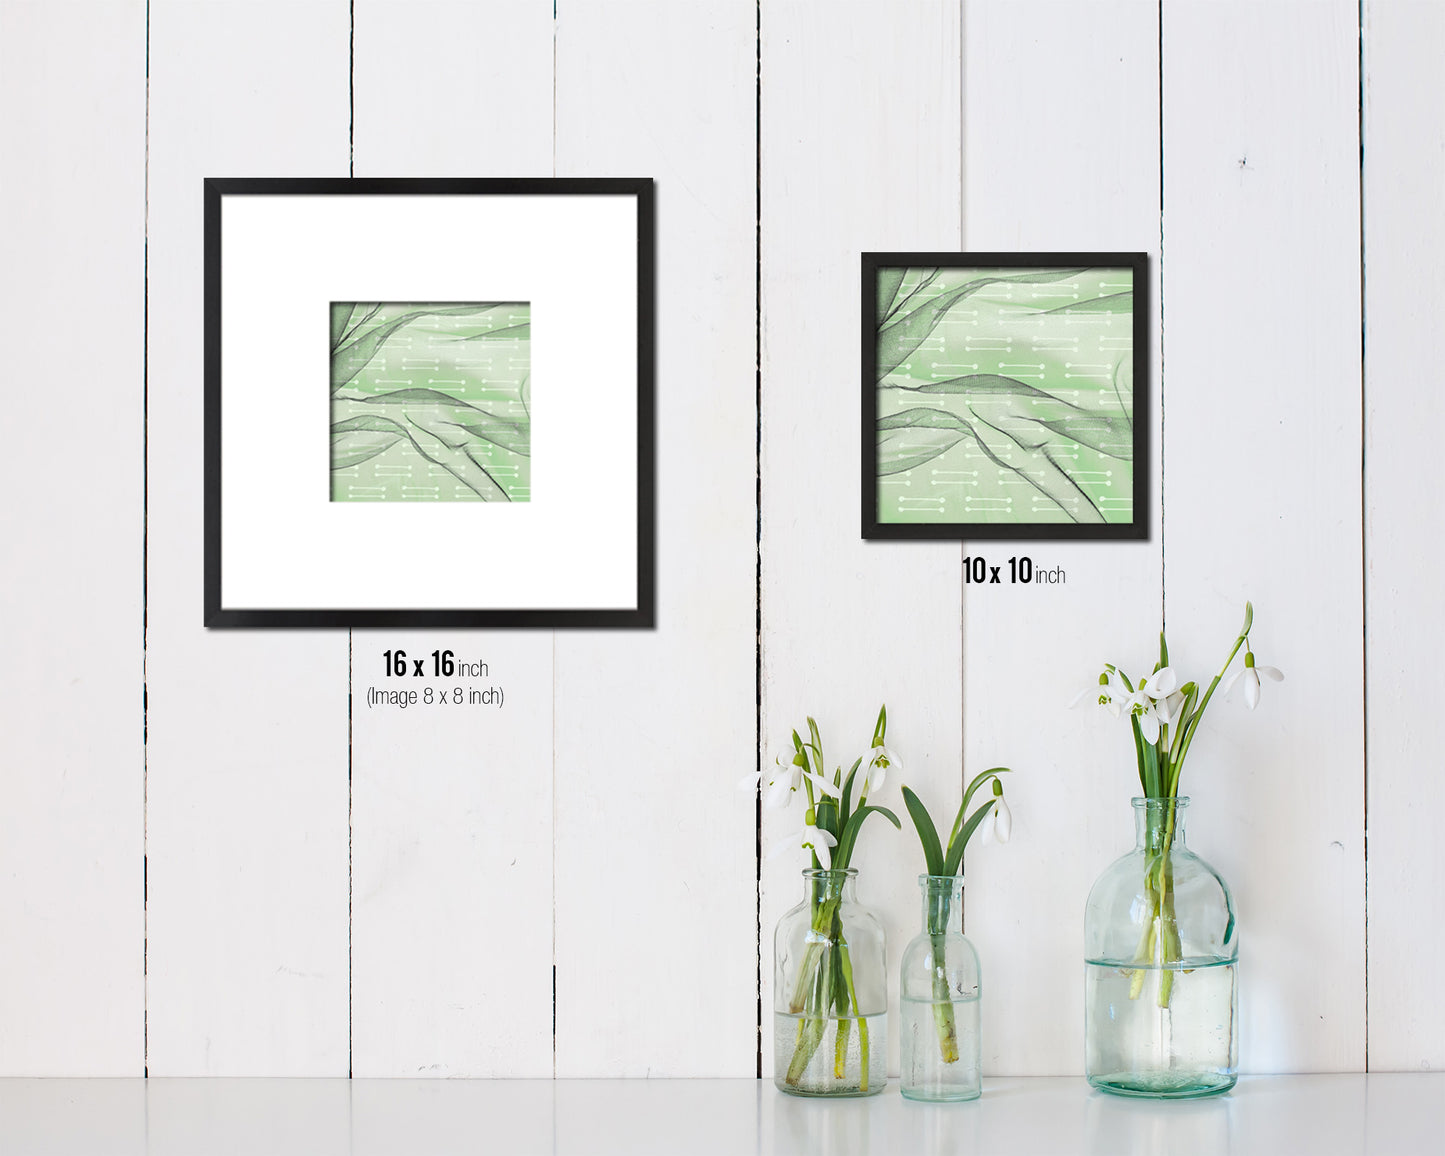 Abstract Green Artwork Wood Frame Gifts Modern Wall Decor Art Prints